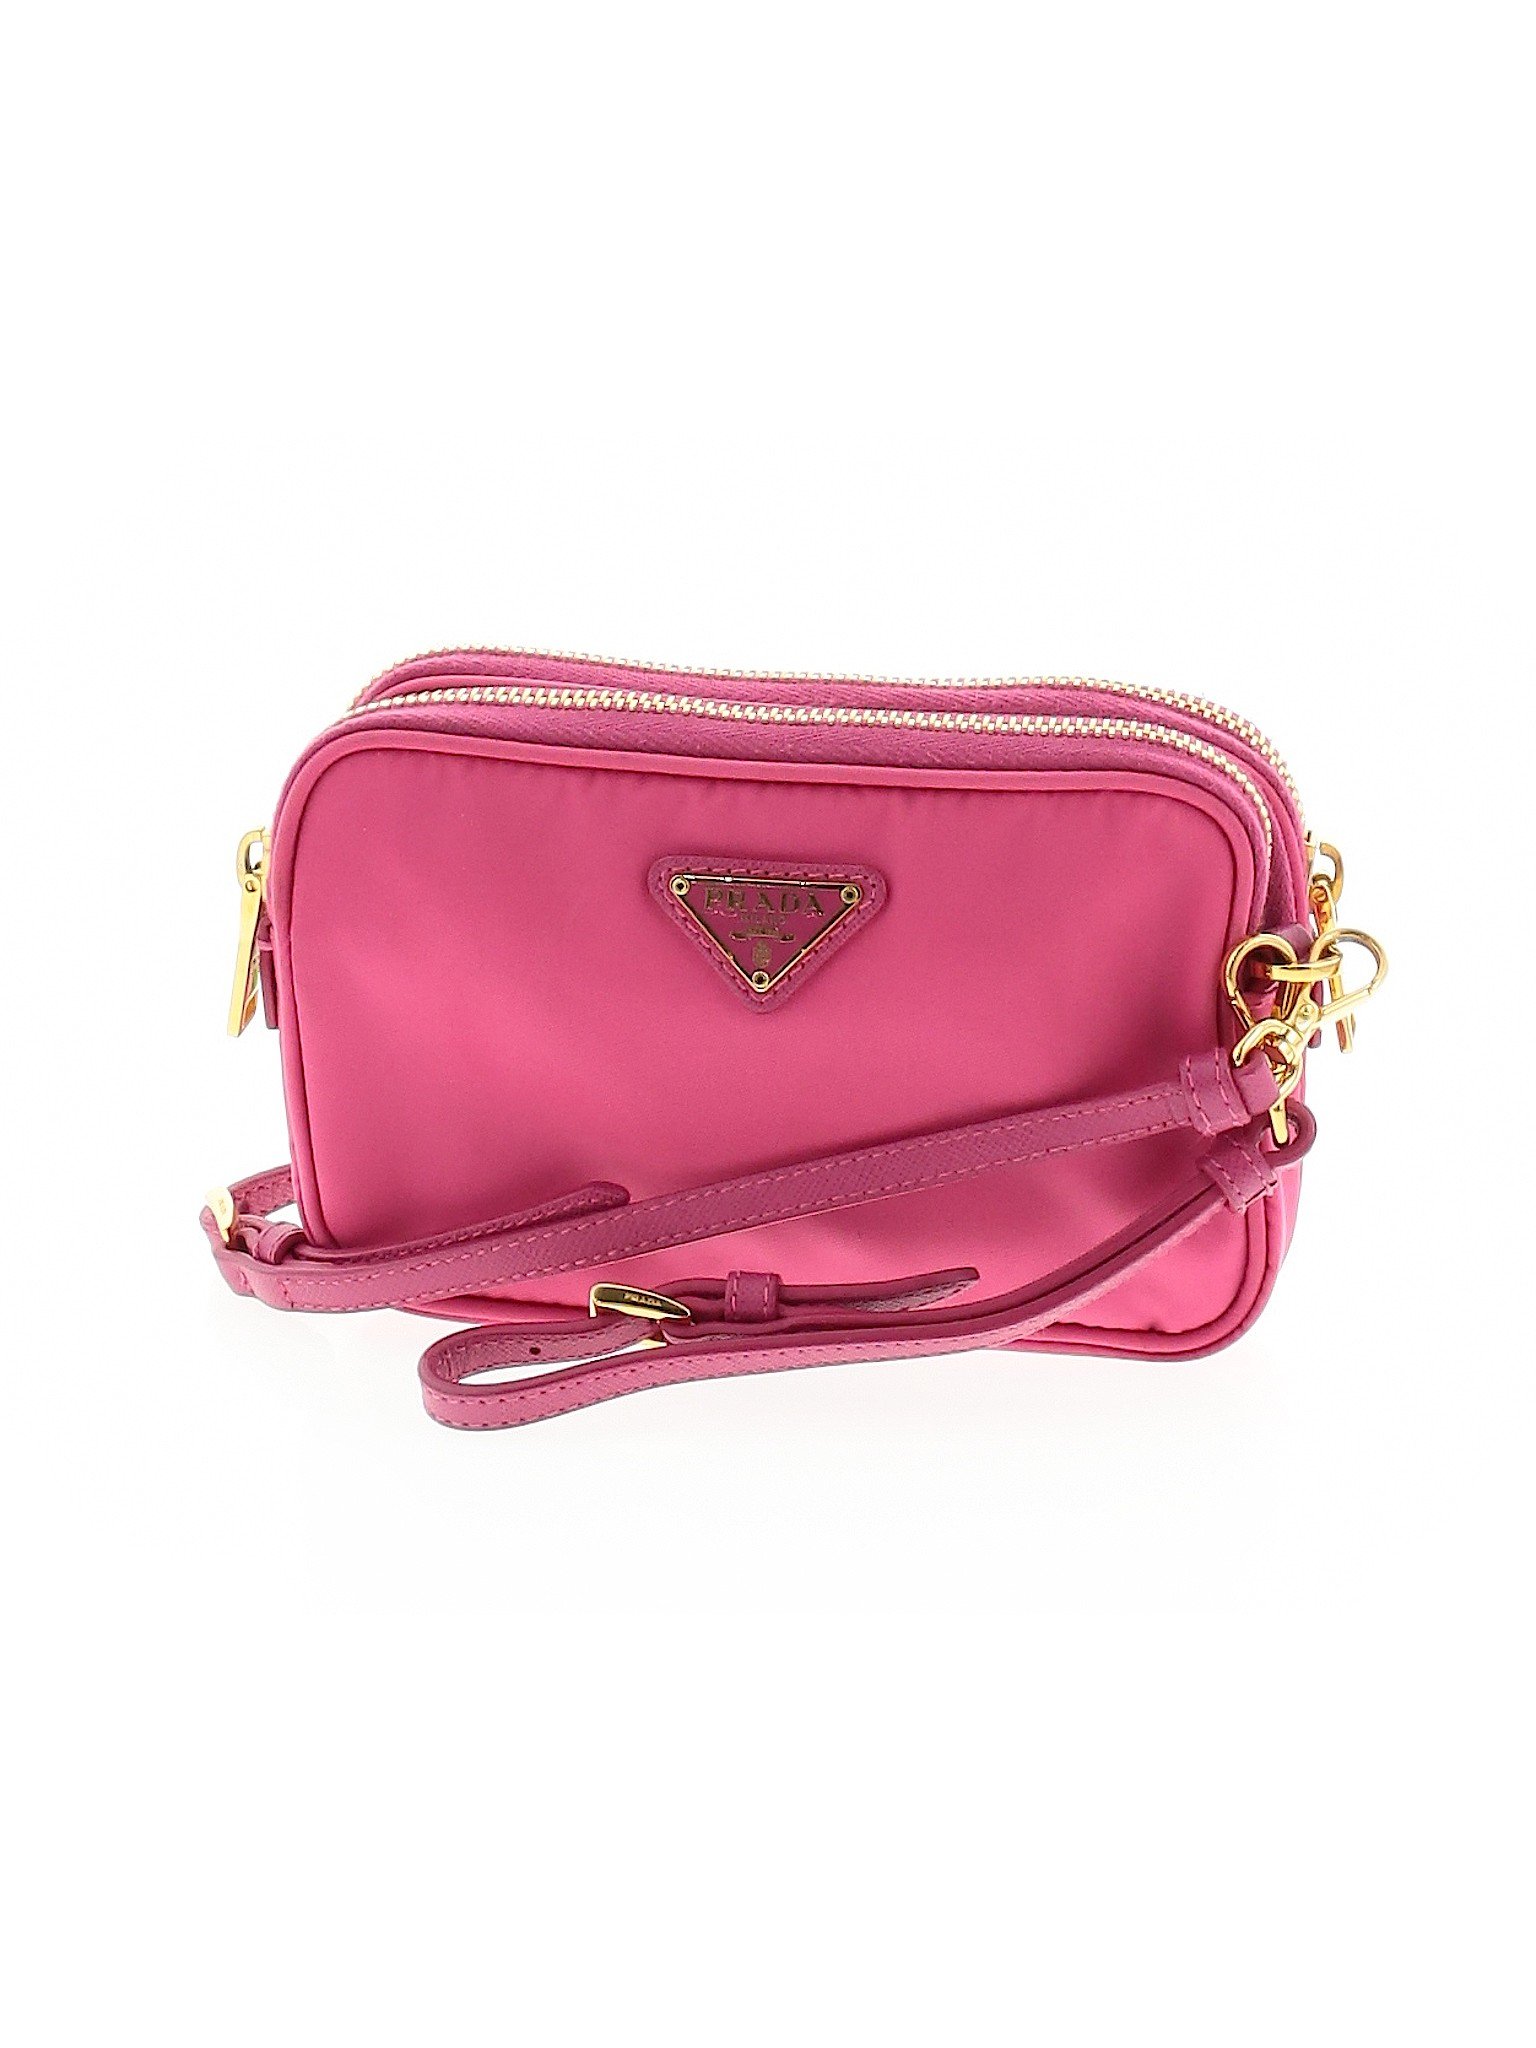 Prada 100% Nylon Solid Pink Crossbody Bag One Size - 45% off | thredUP